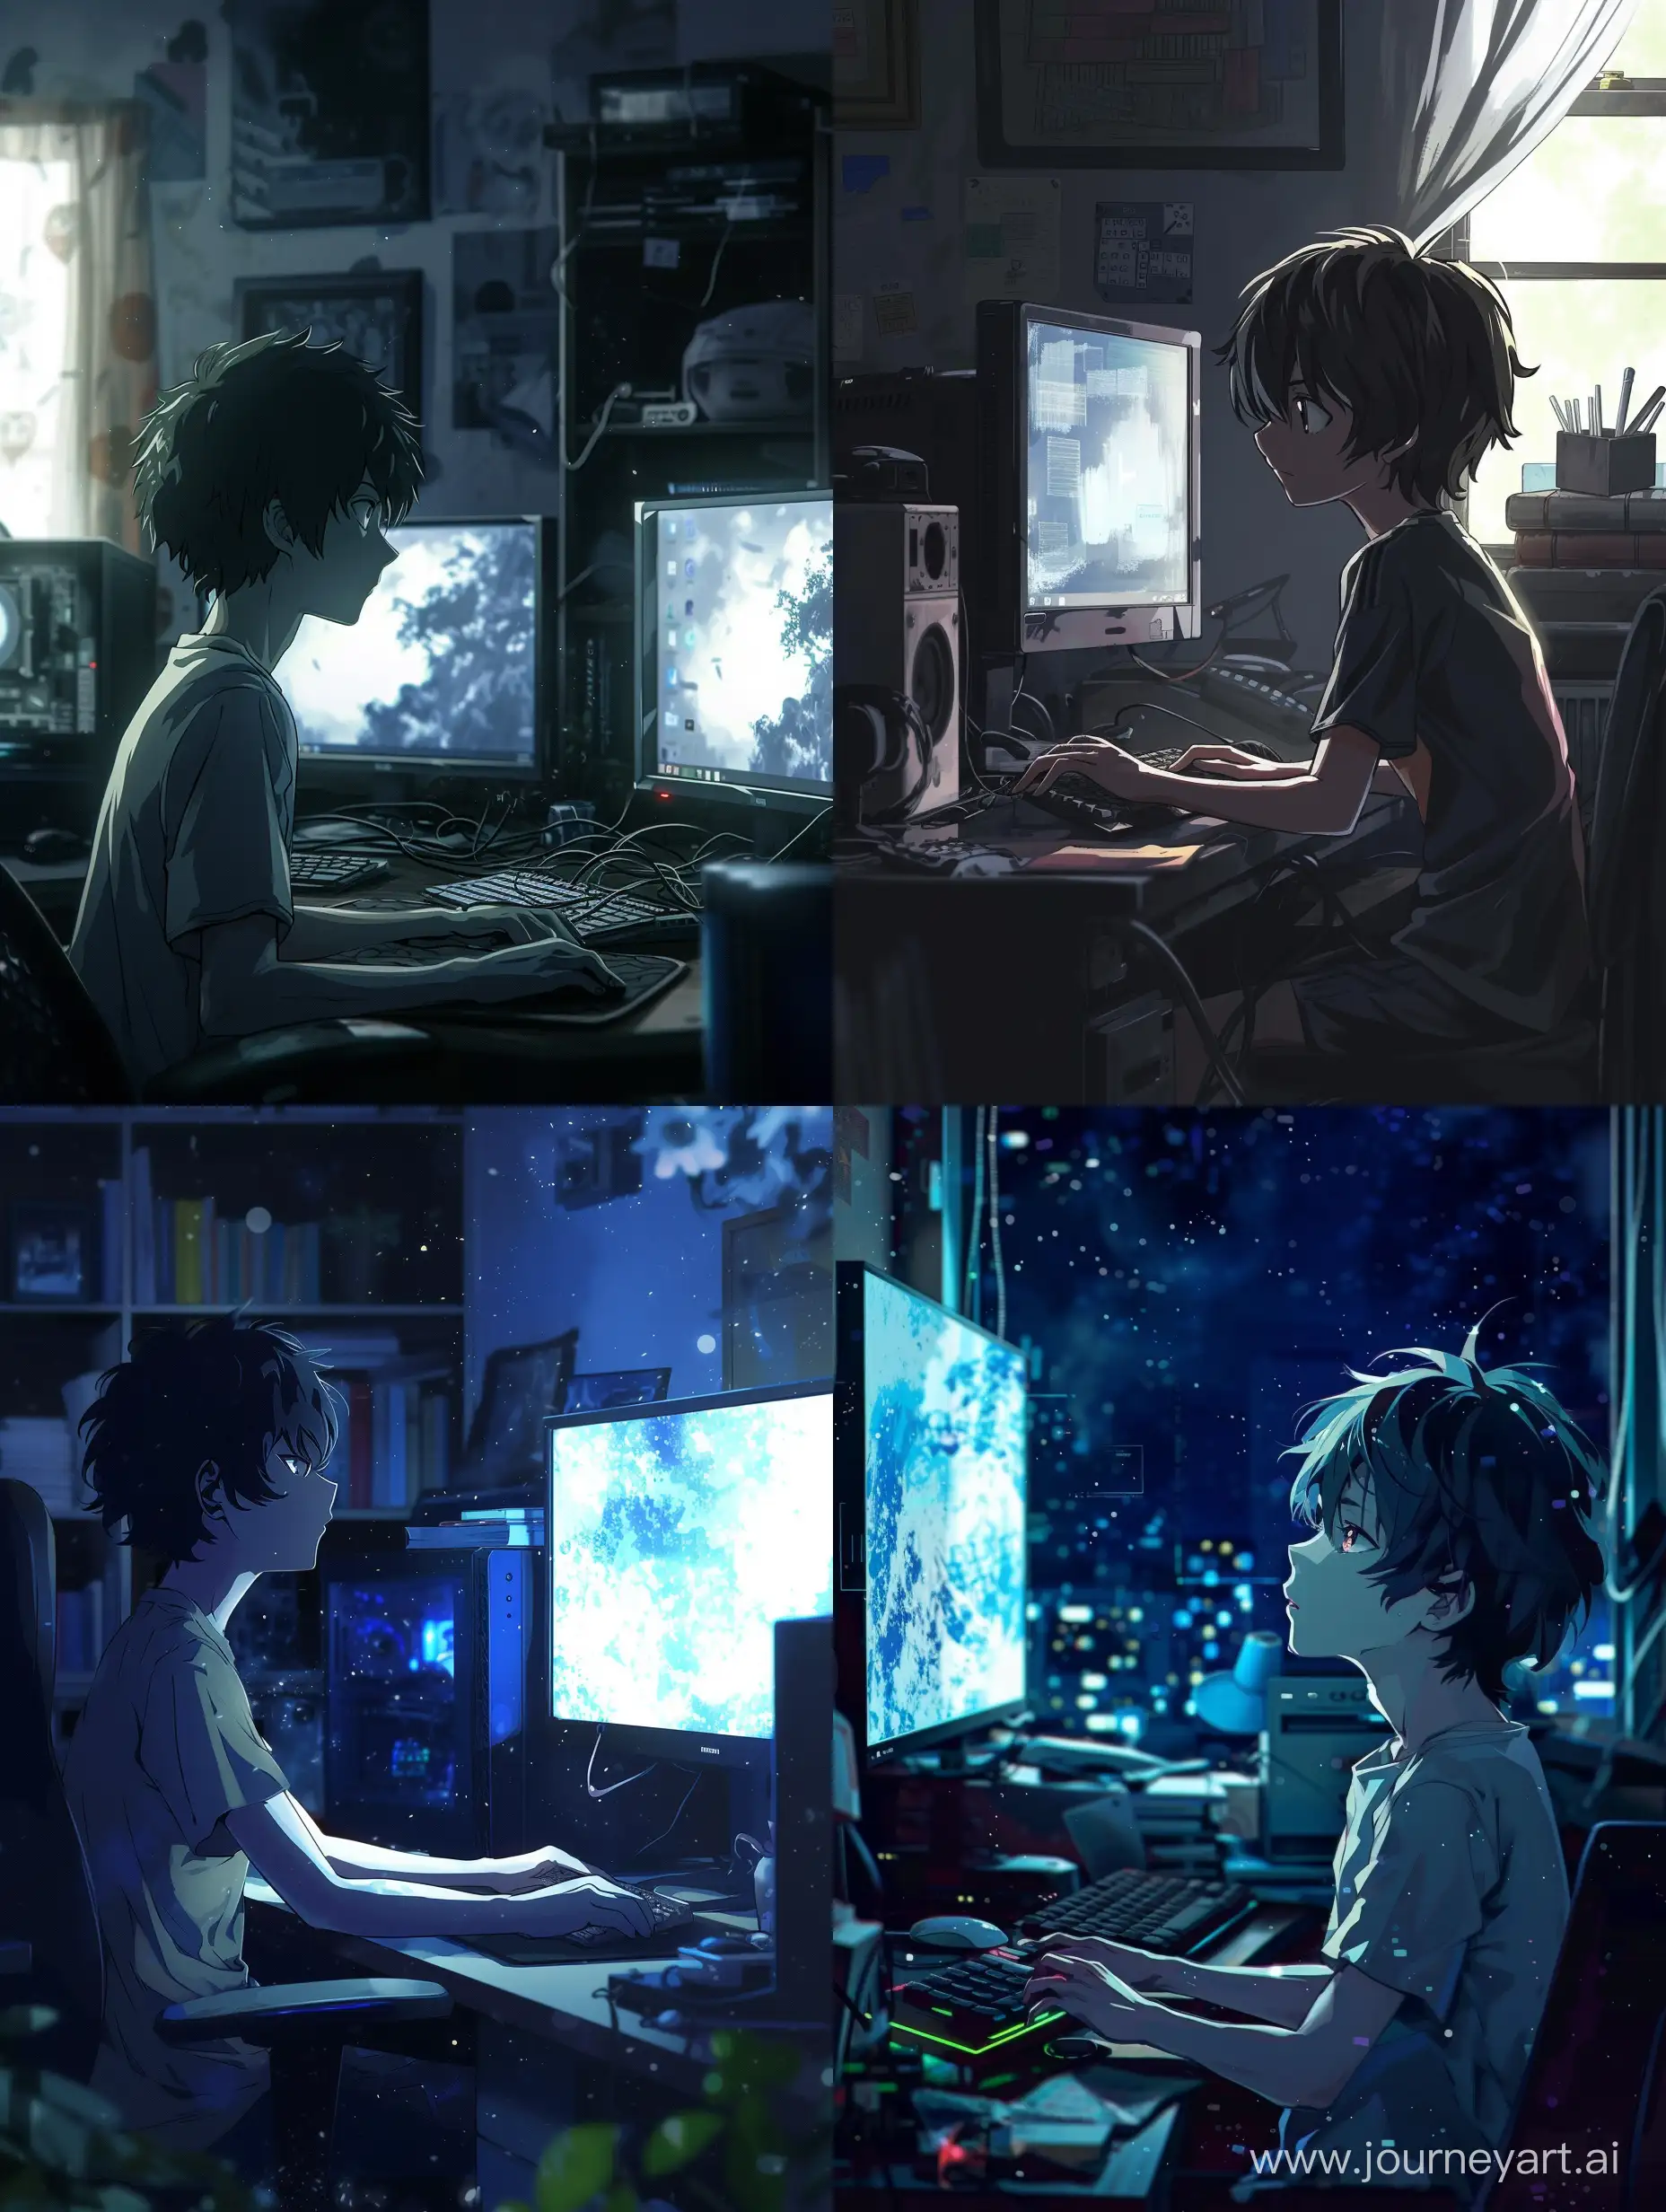 Brooding-16YearOld-in-Dark-AnimeThemed-Room-with-Computer